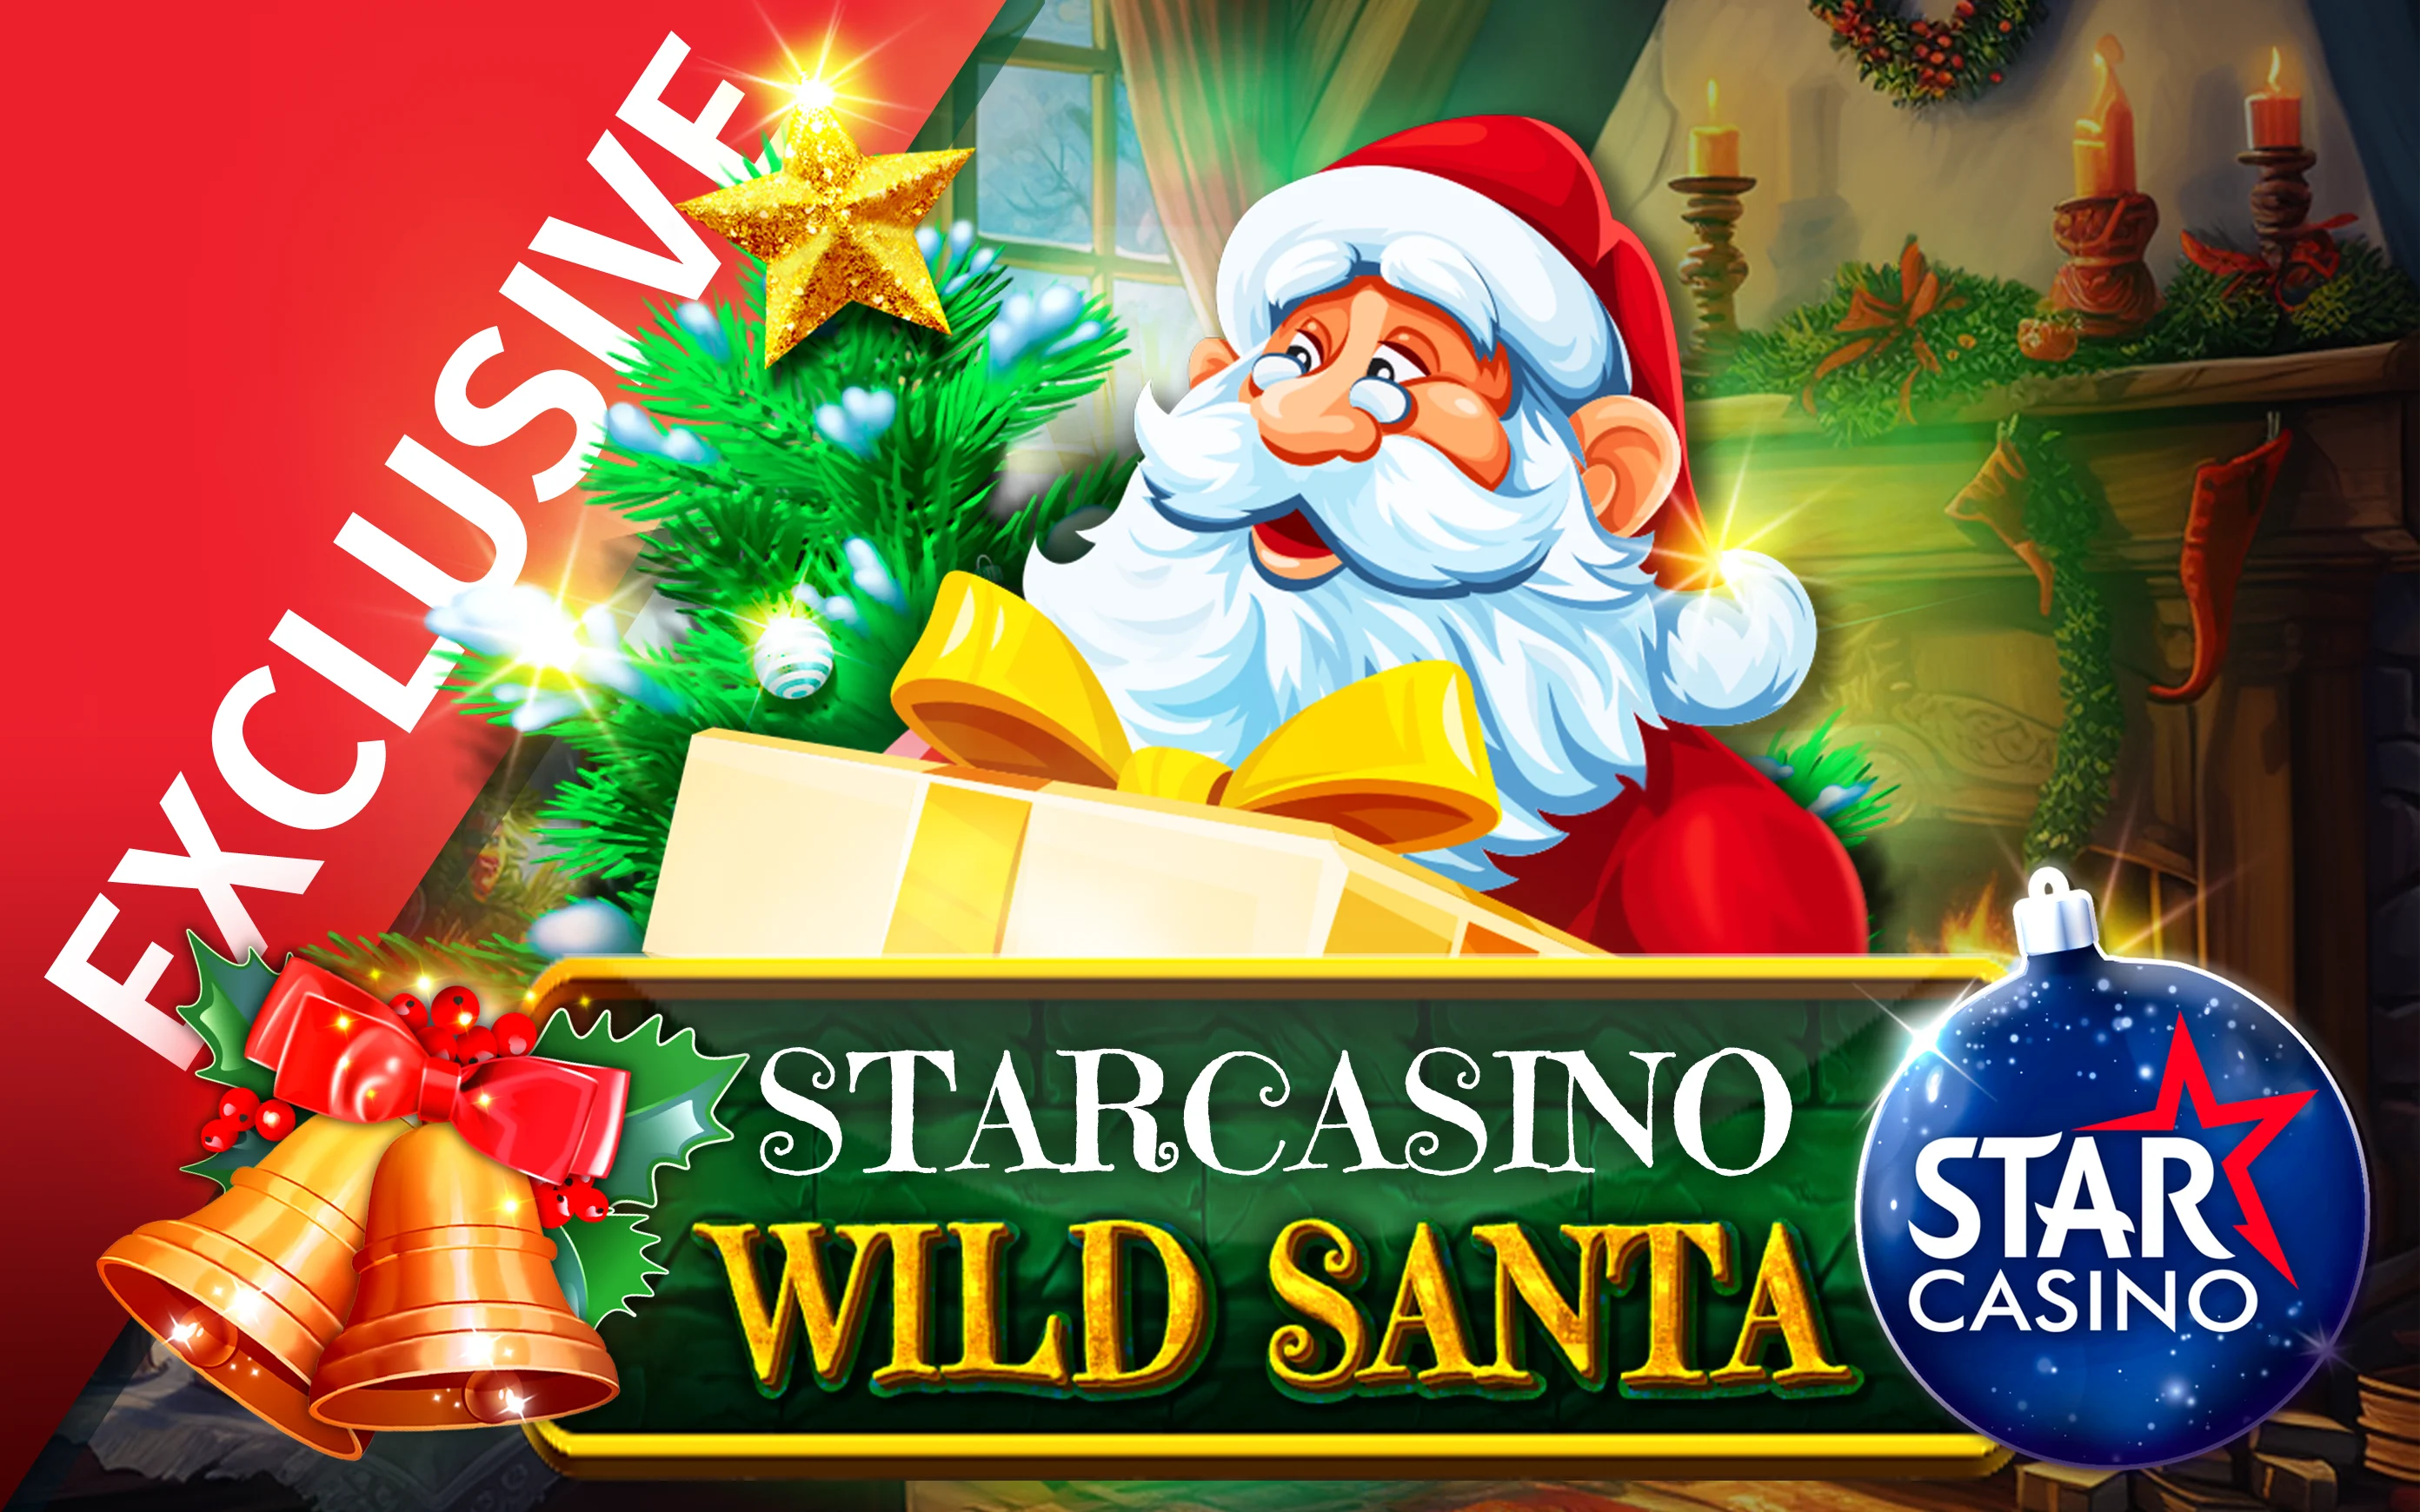 Joacă Starcasino Wild Santa 2 în cazinoul online Starcasino.be